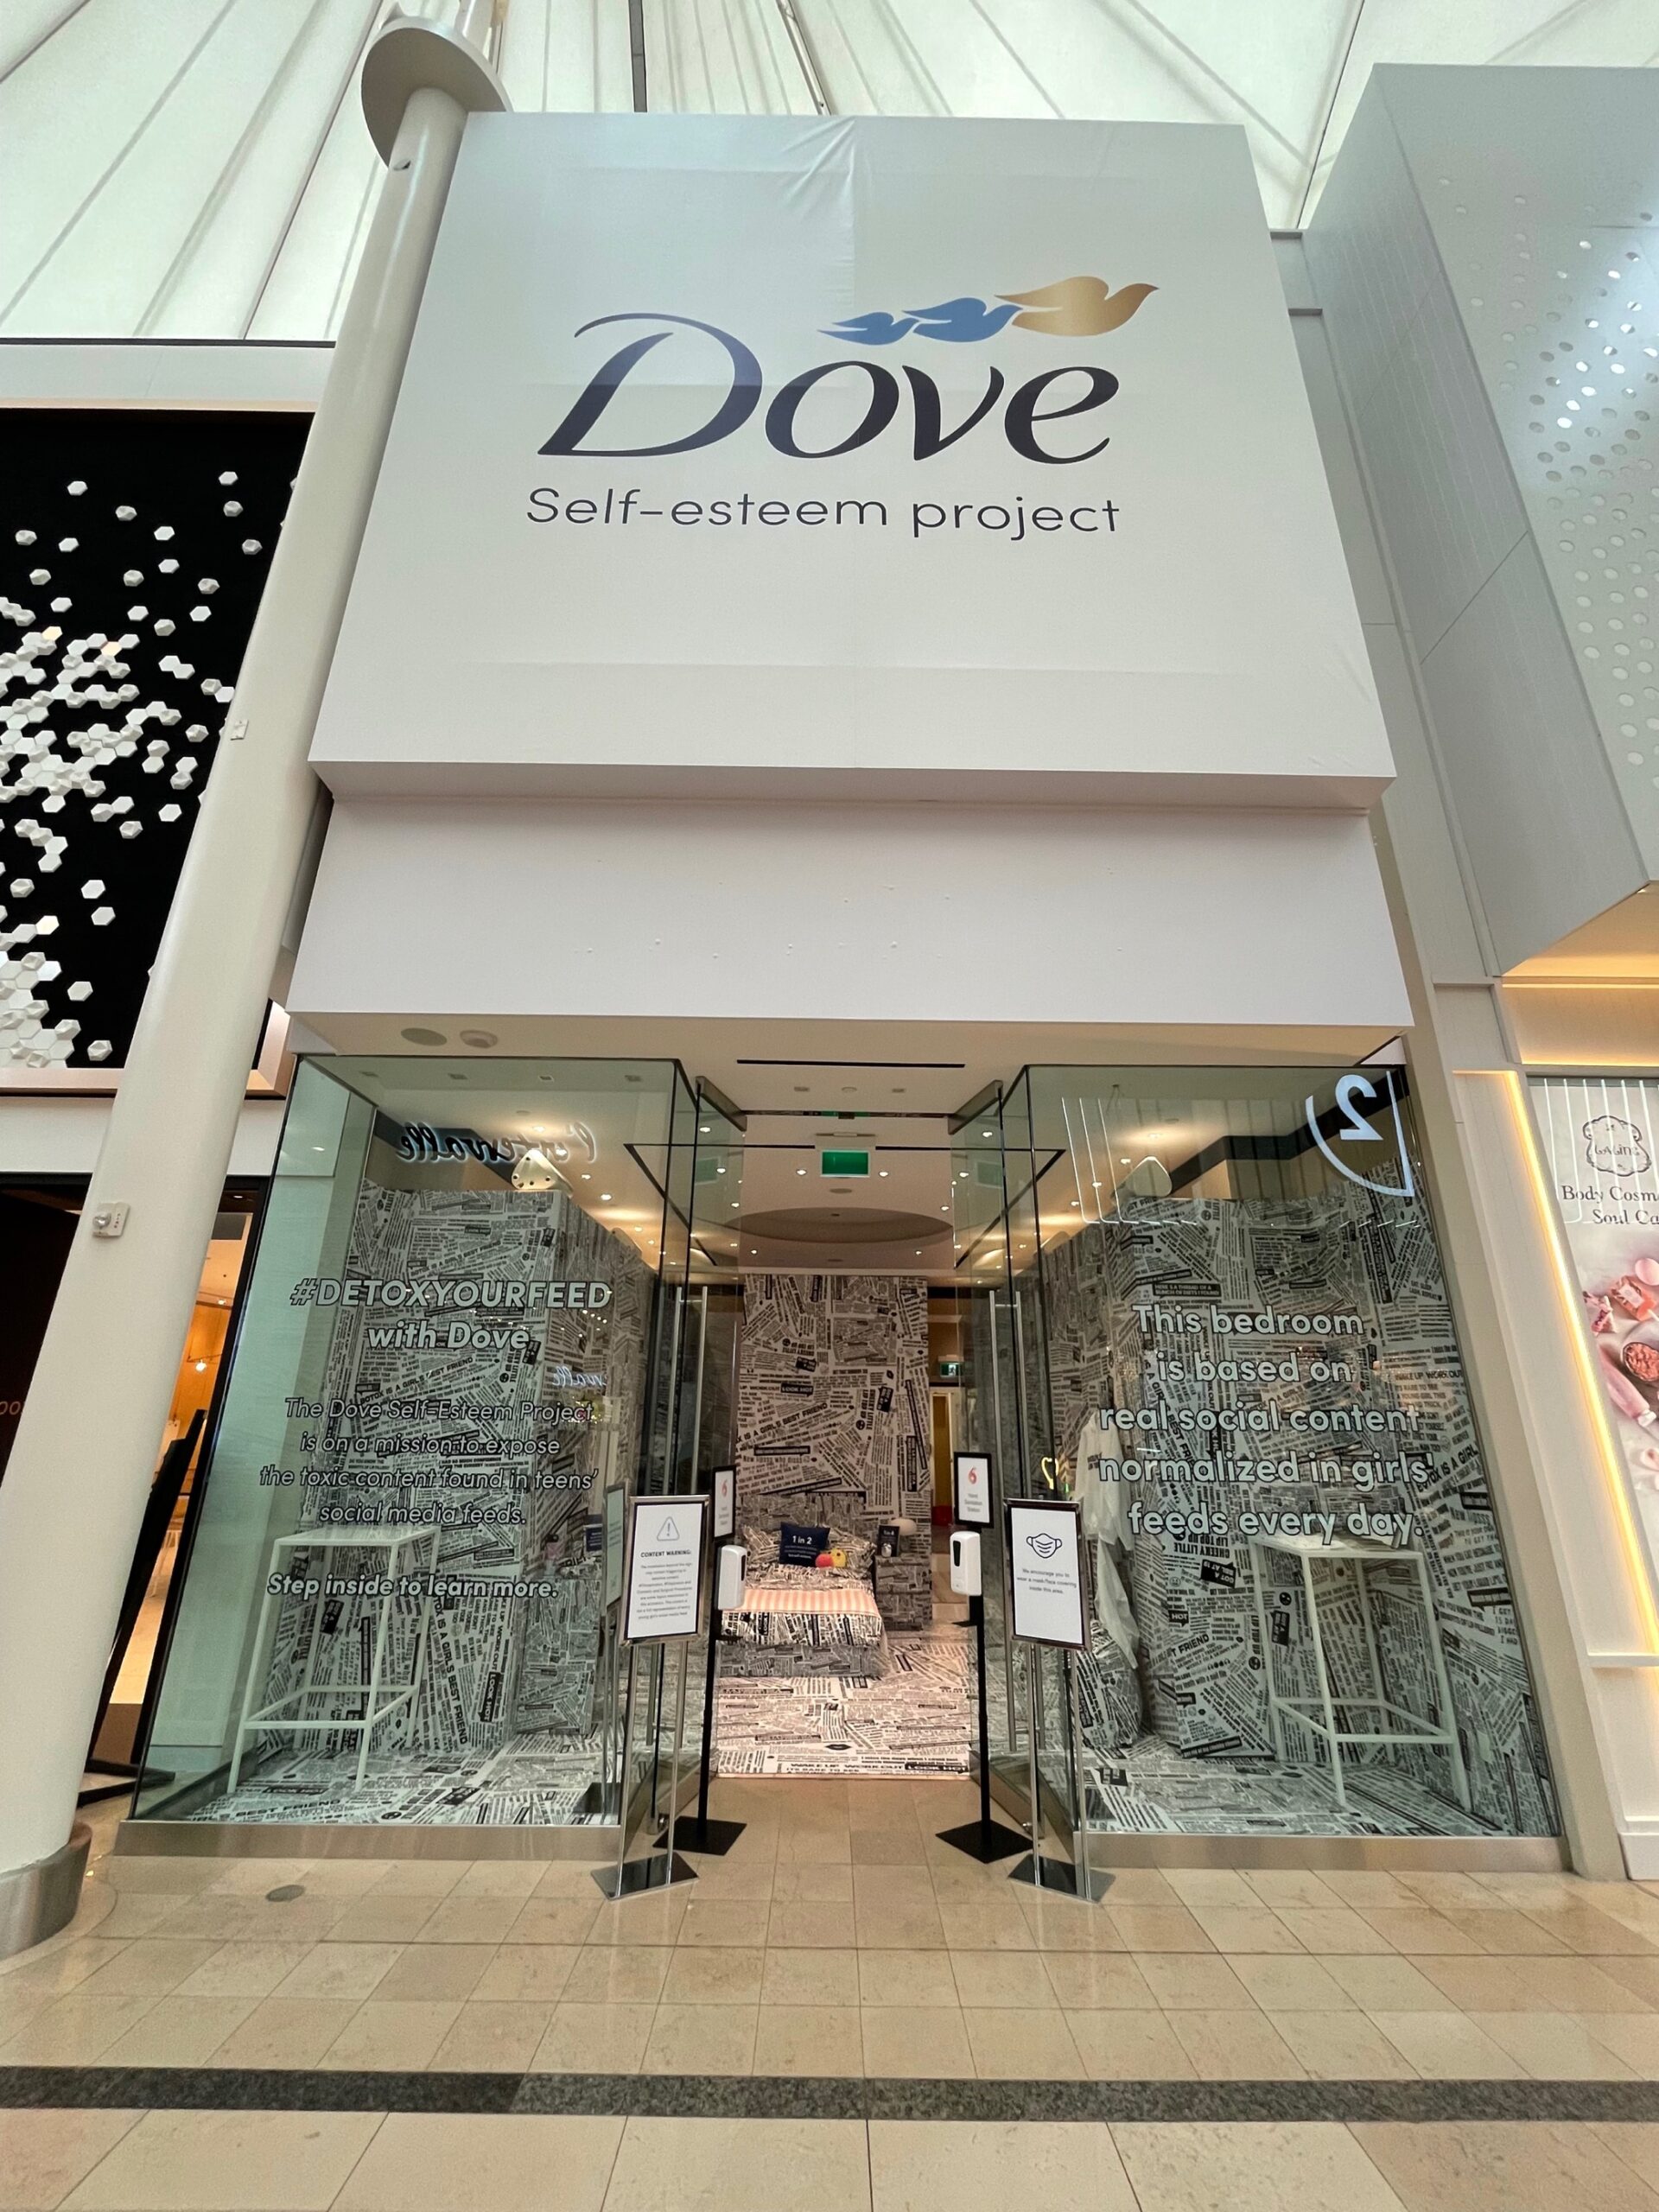 The Dove Self-Esteem Project #DetoxYourFeed Campaign